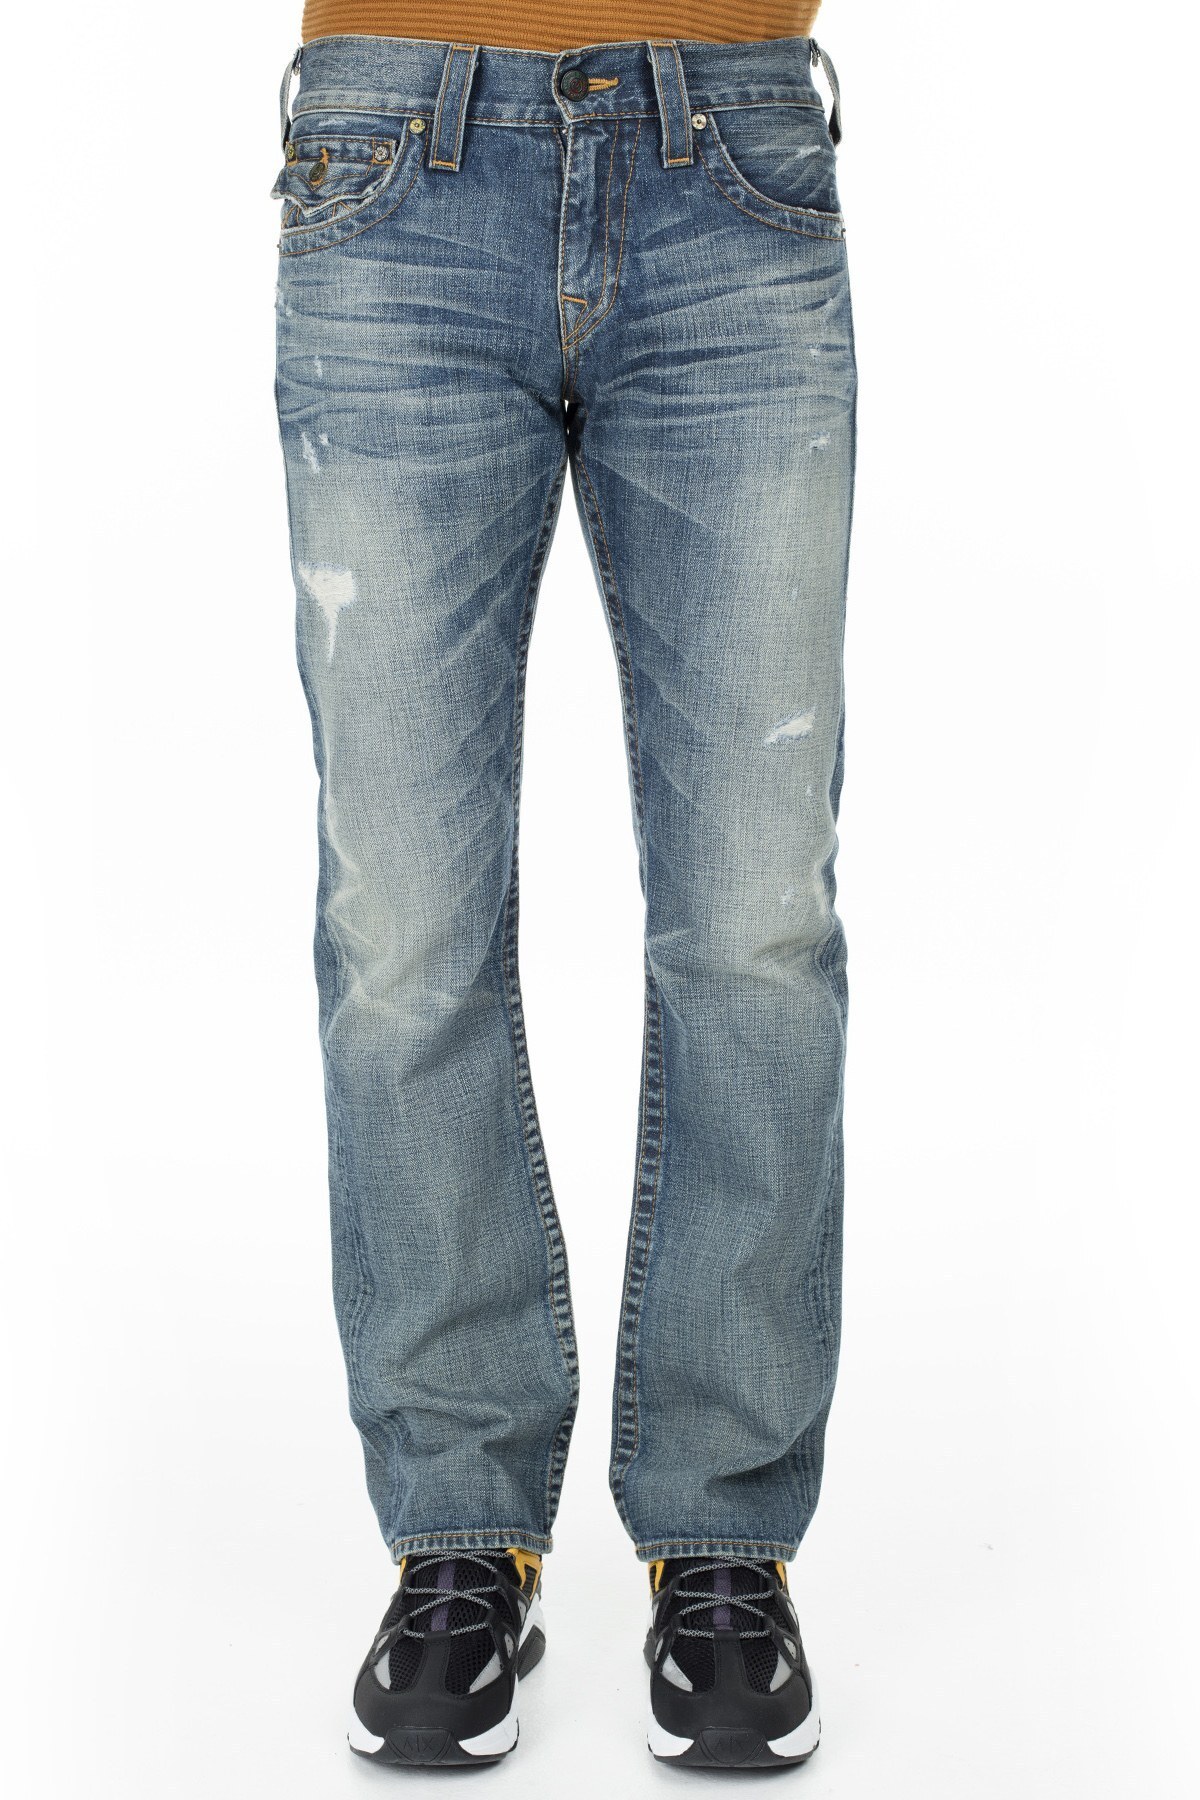 True Religion Jeans Erkek Kot Pantolon MJW859S34 İNDİGO